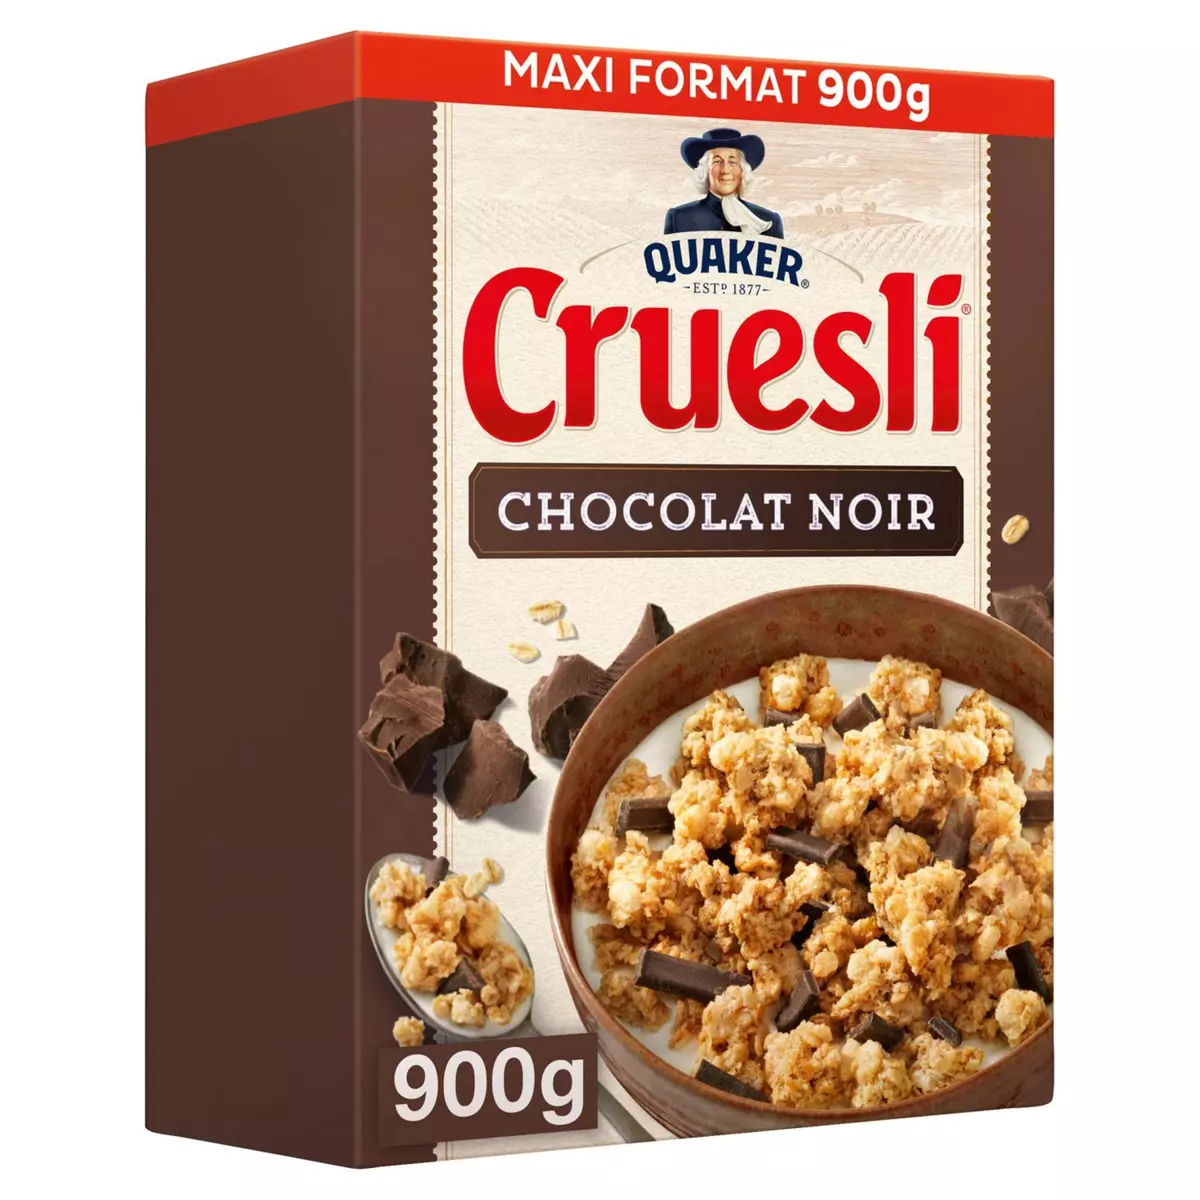 QUAKER Cruesli céréales au chocolat noir maxi format 900g